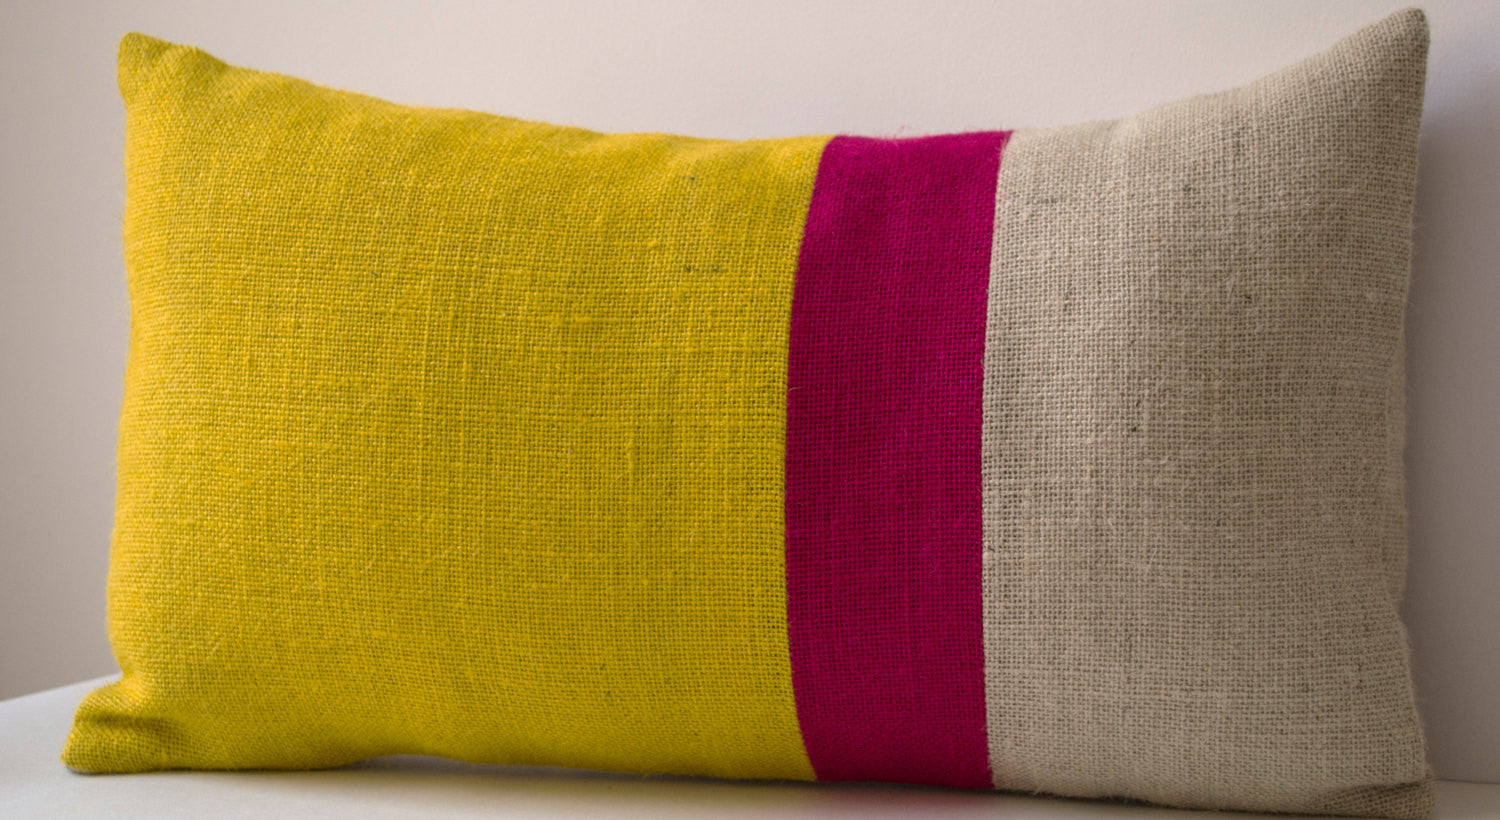 Handmade burlap yellow throw pillow with color block